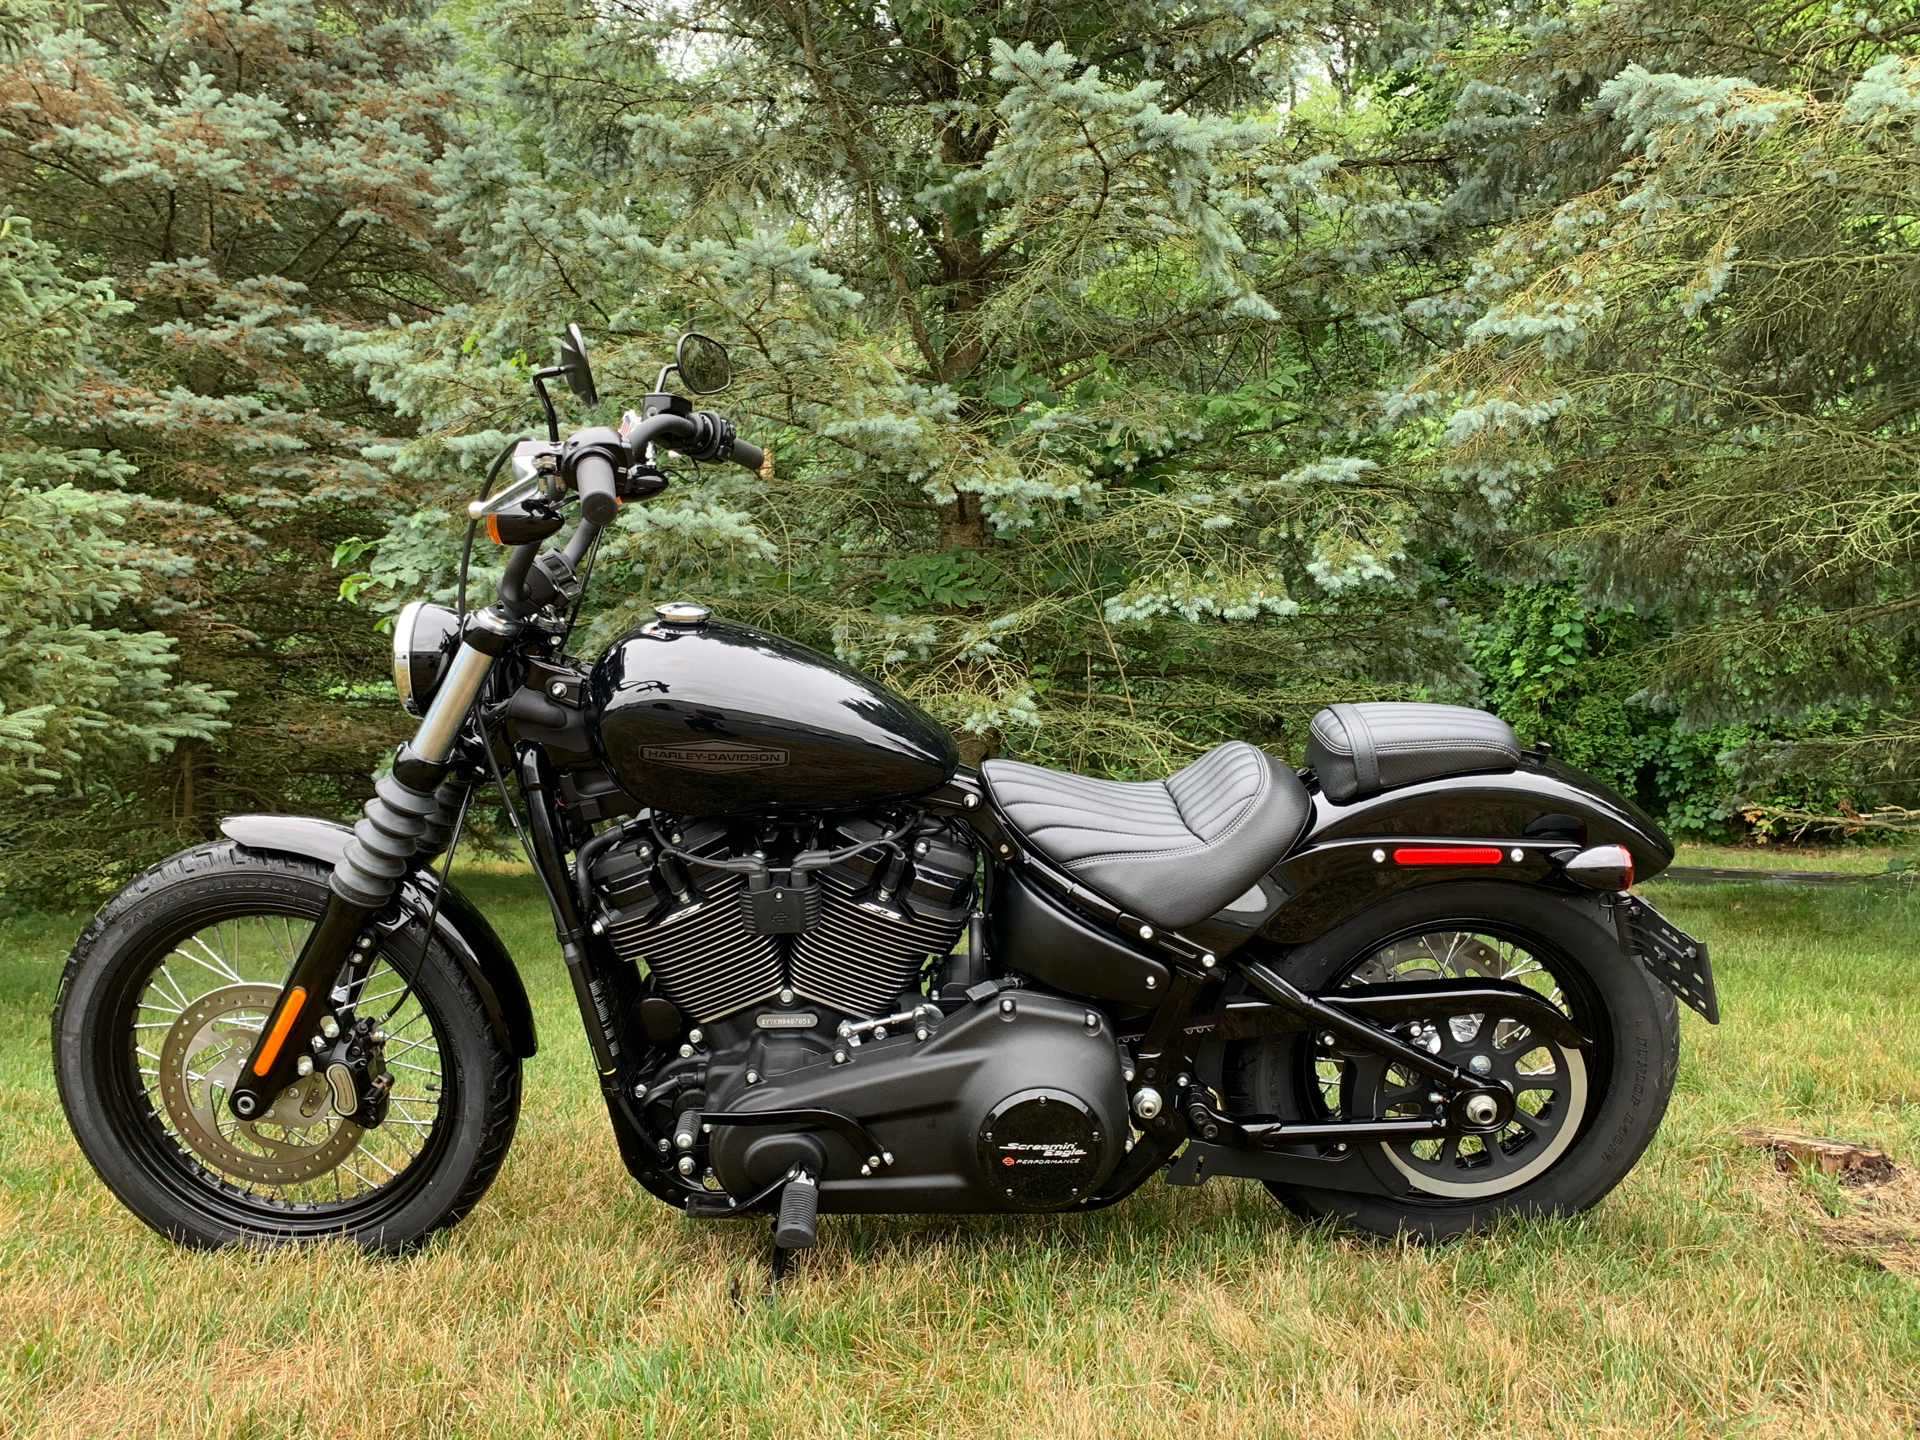 2021 Harley-Davidson Street Bob® 114 in Portage, Michigan - Photo 13